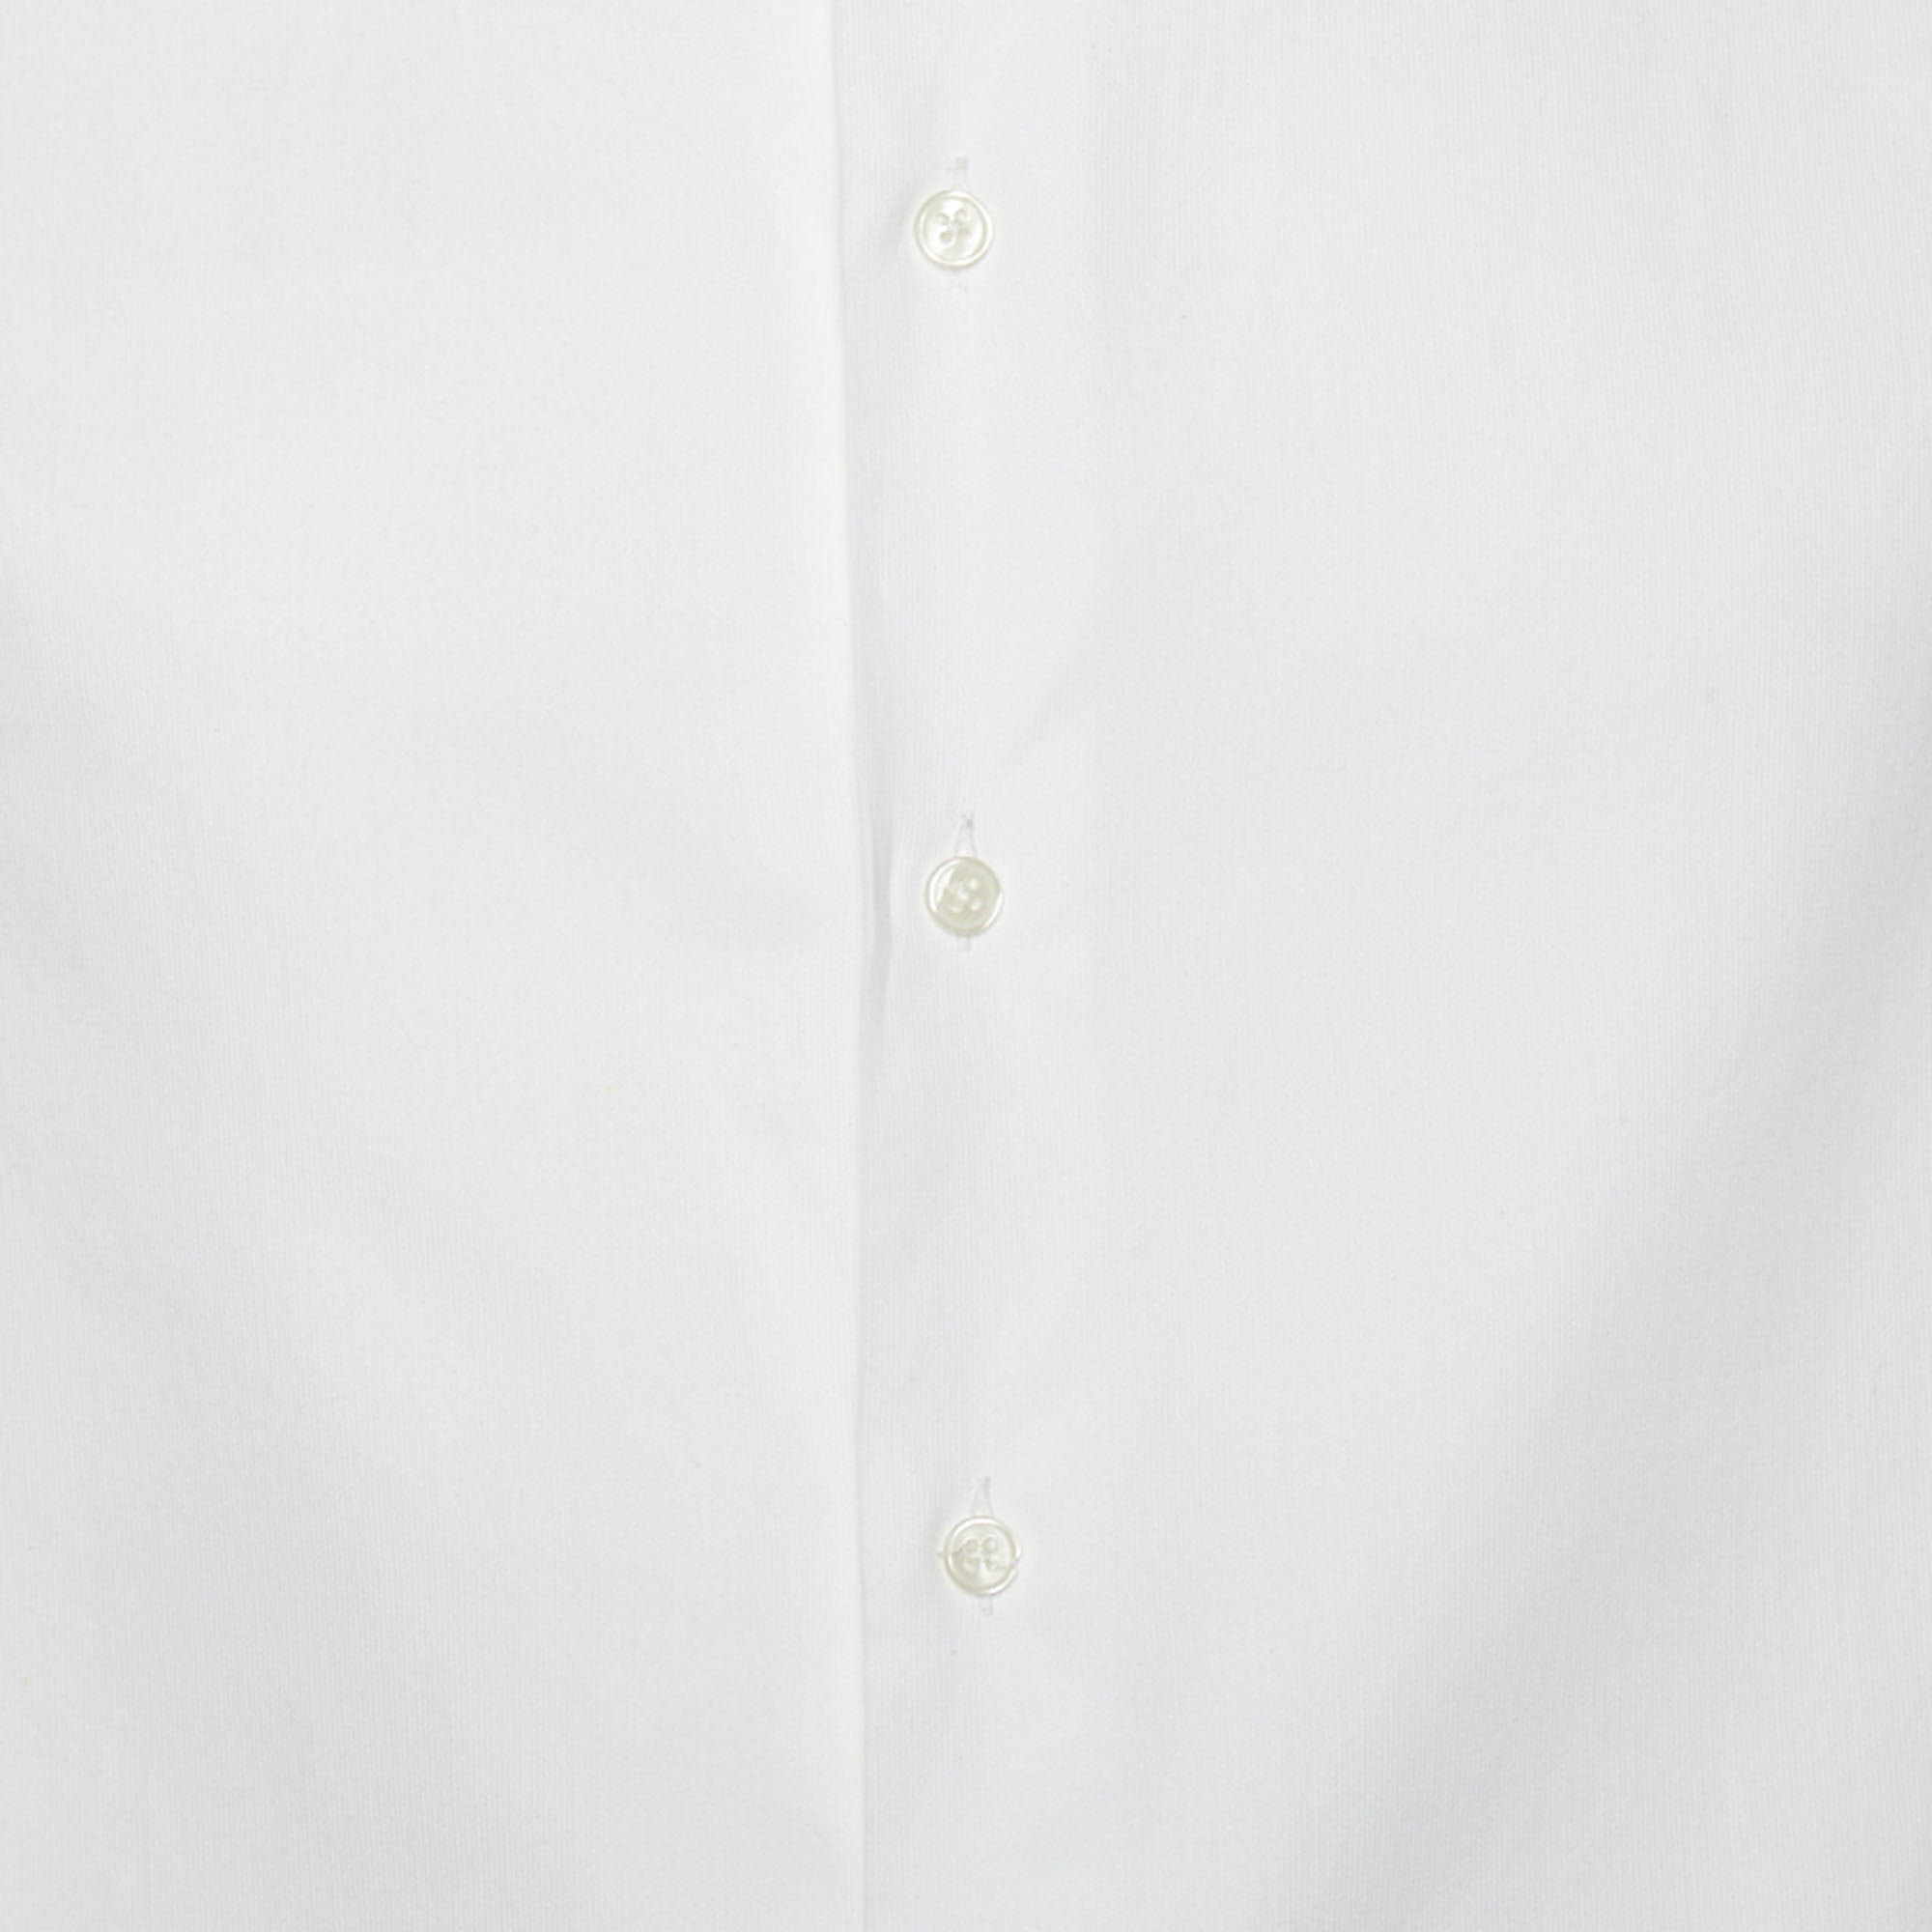 Armani Collezioni White Cotton Modern Fit Shirt M